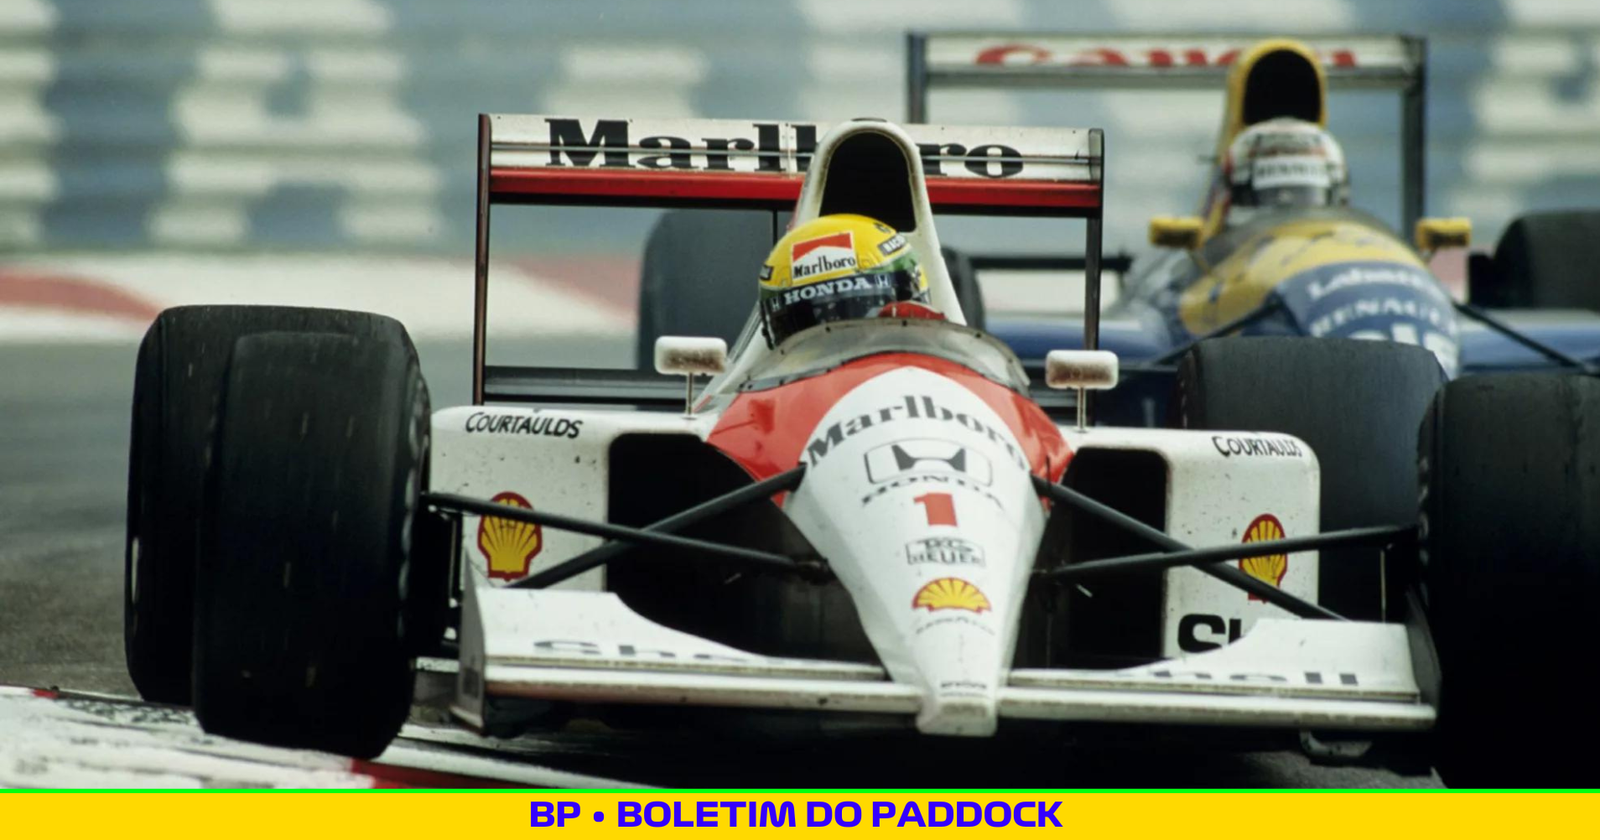 BPCast 251 • Um bate papo sobre Ayrton Senna da Silva • BP • Boletim do Paddock